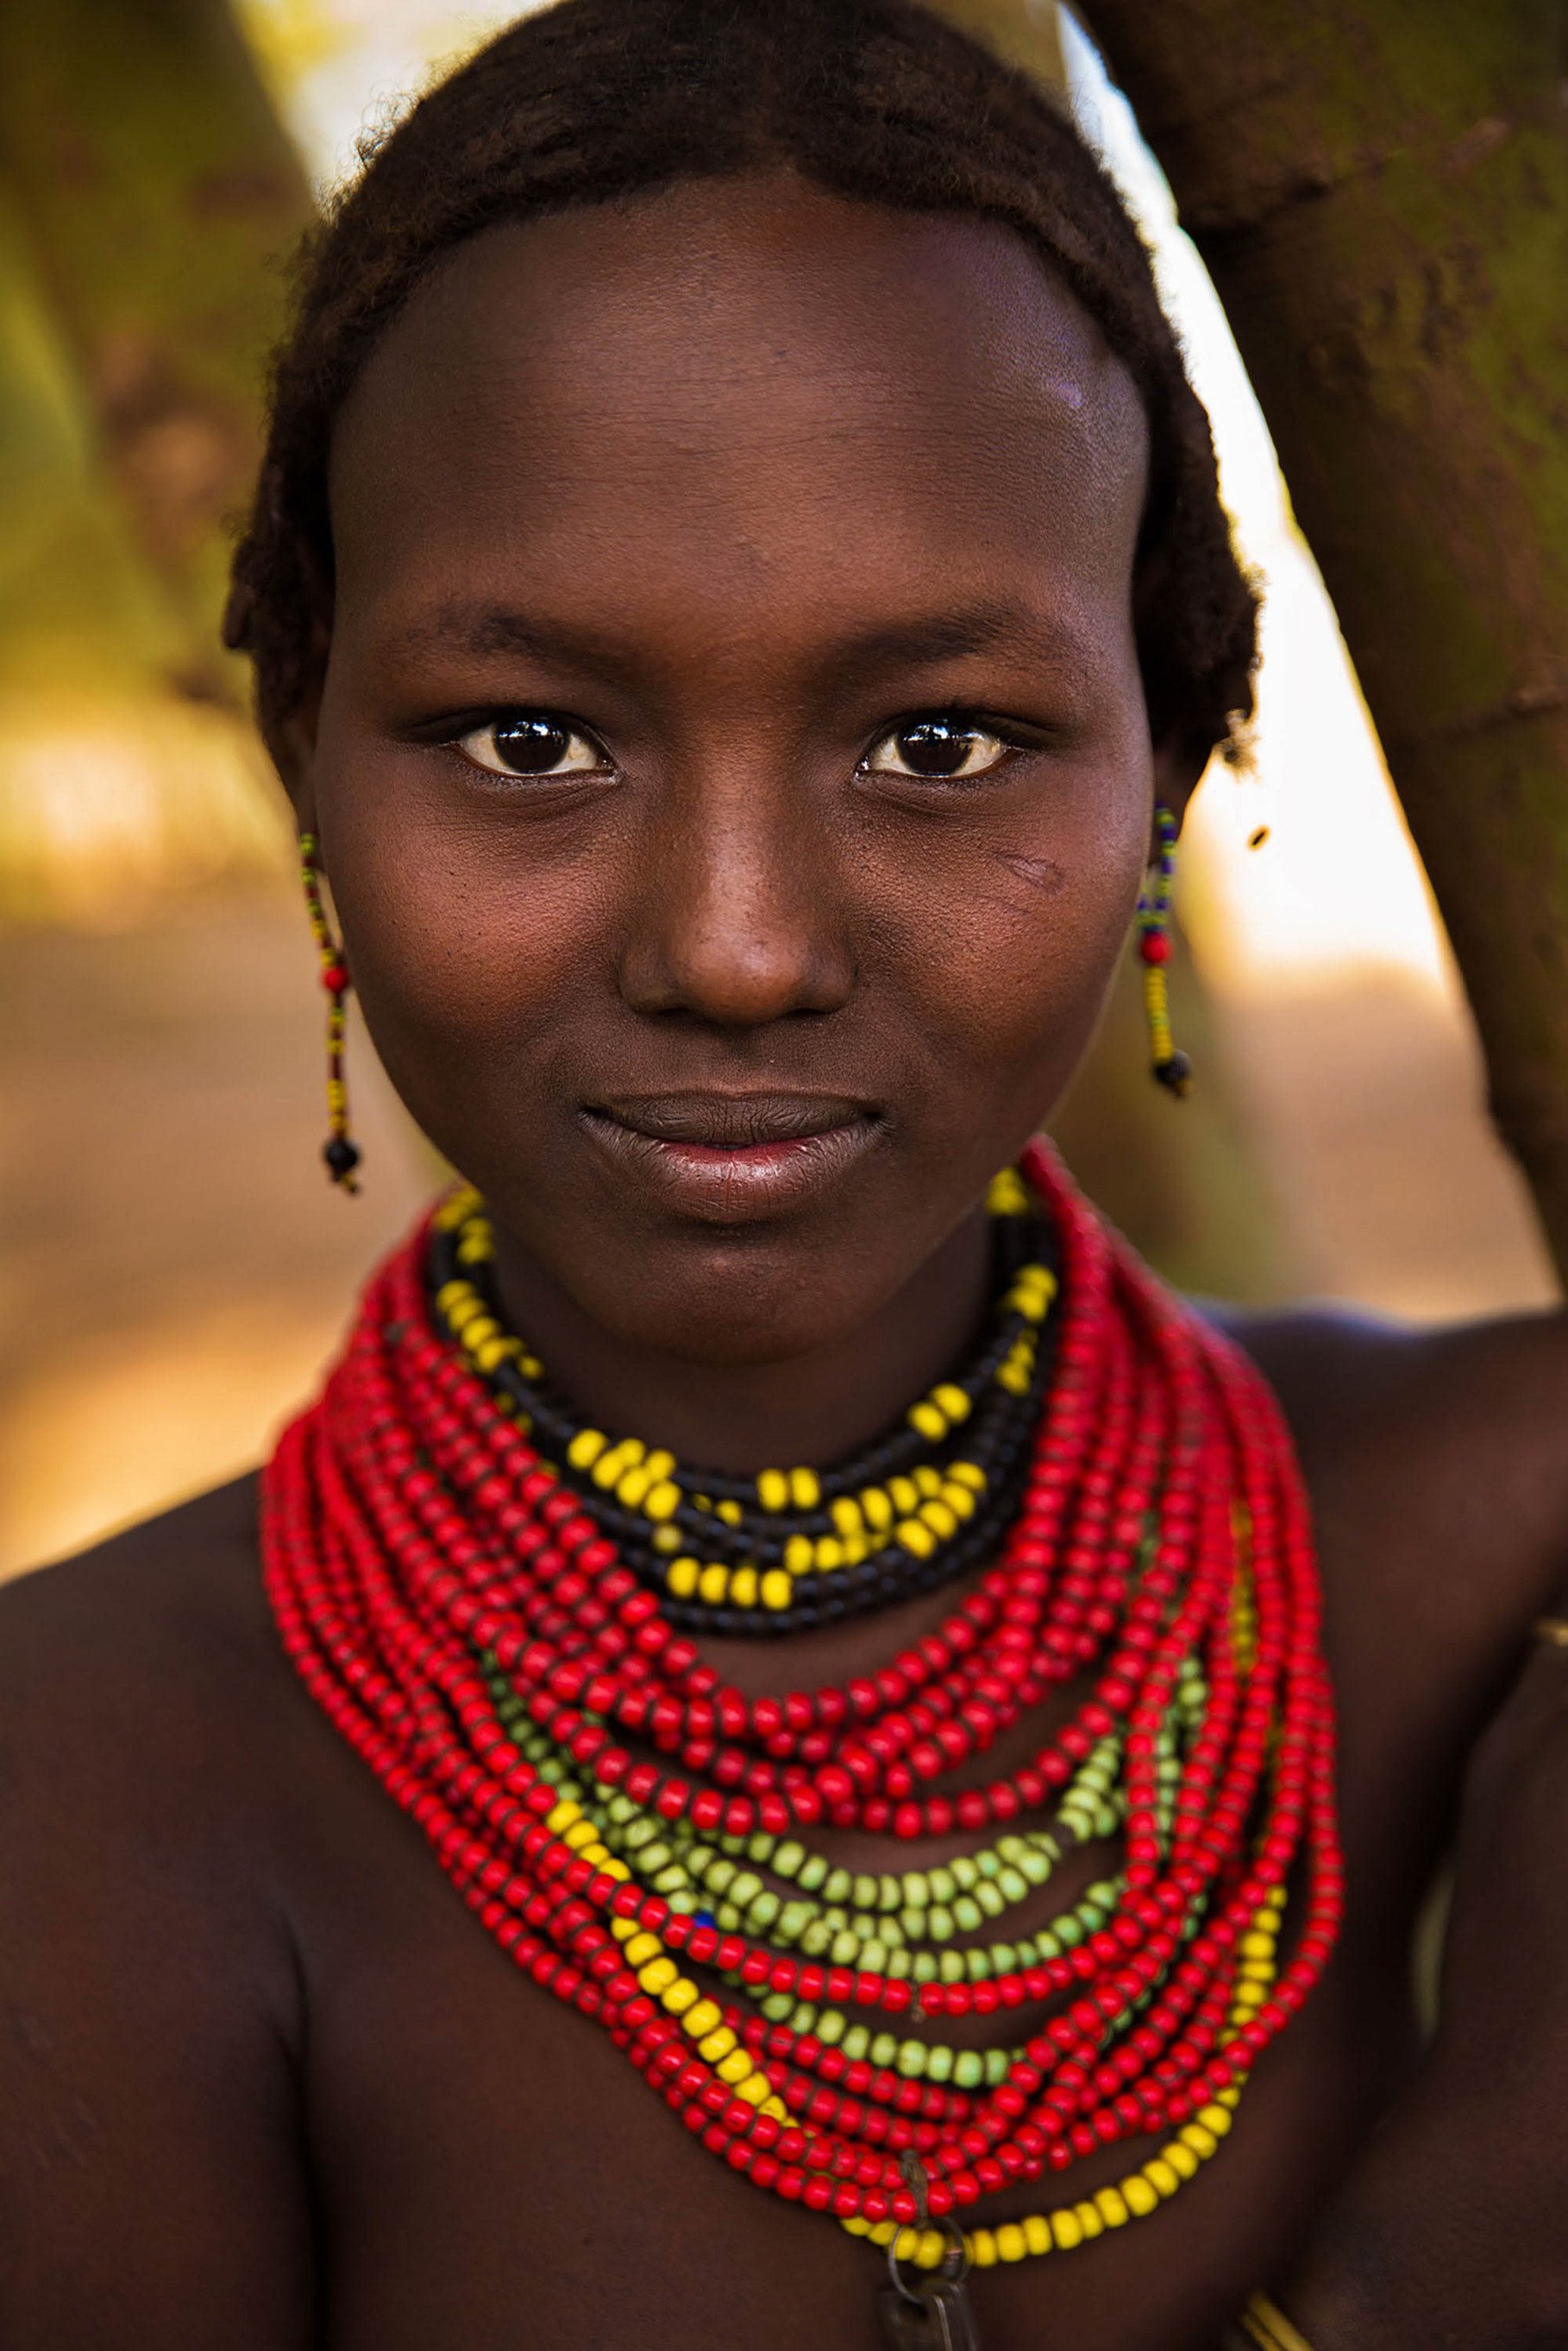 Tribe girl. Долина ОМО Эфиопия. Долина ОМО Эфиопия девушки. Племя дасанеч Эфиопия. Африканцы негроидная раса.